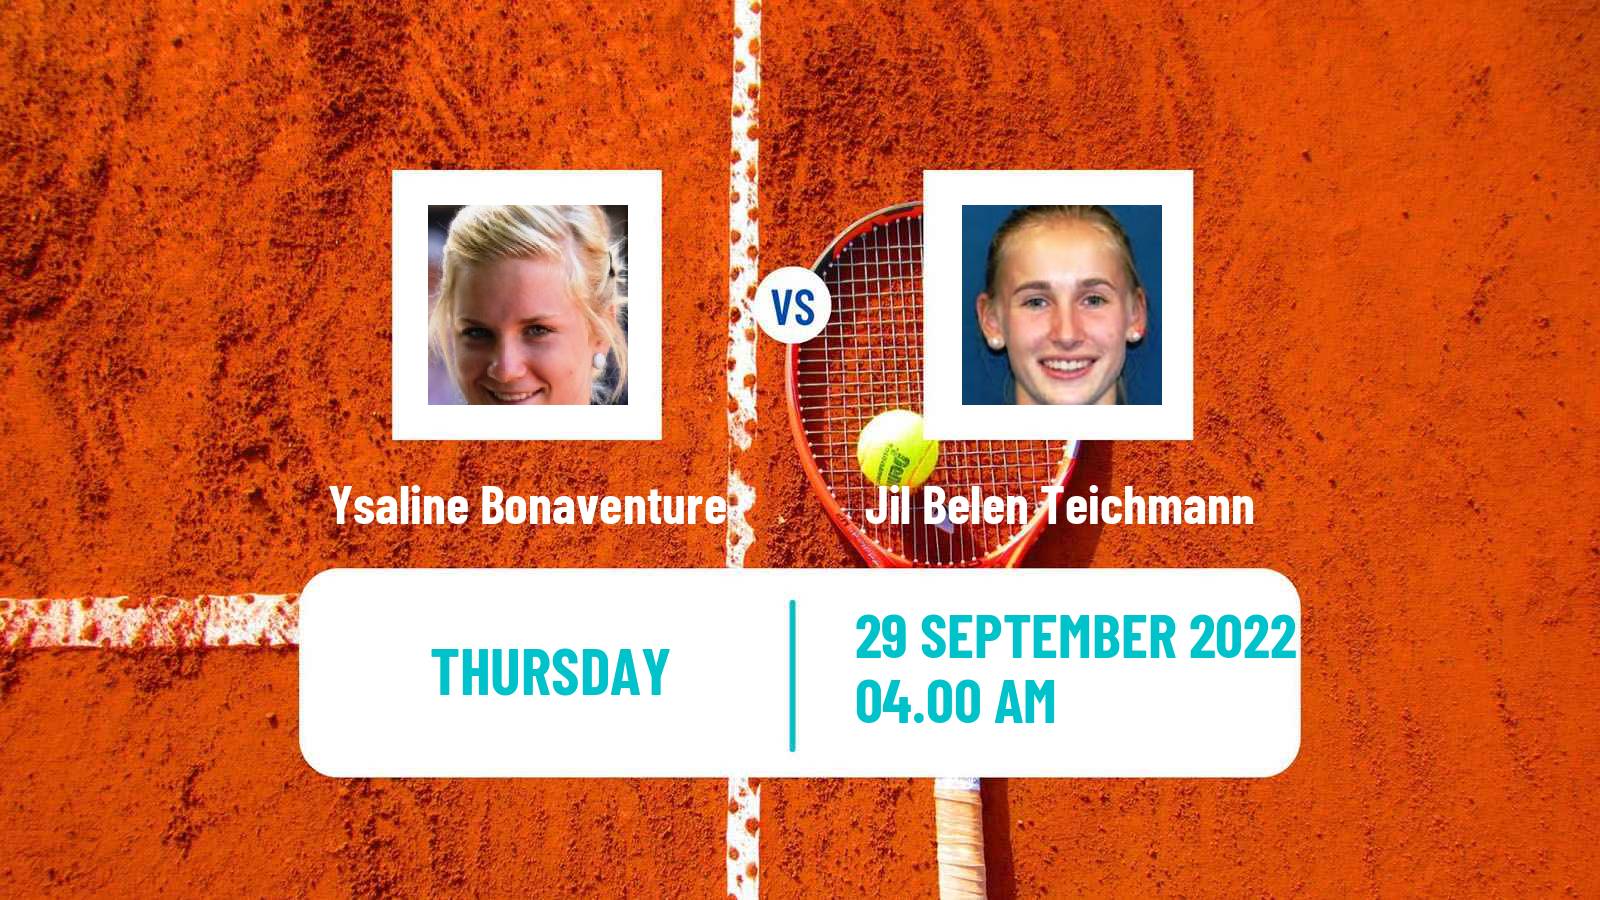 Tennis WTA Tallinn Ysaline Bonaventure - Jil Belen Teichmann